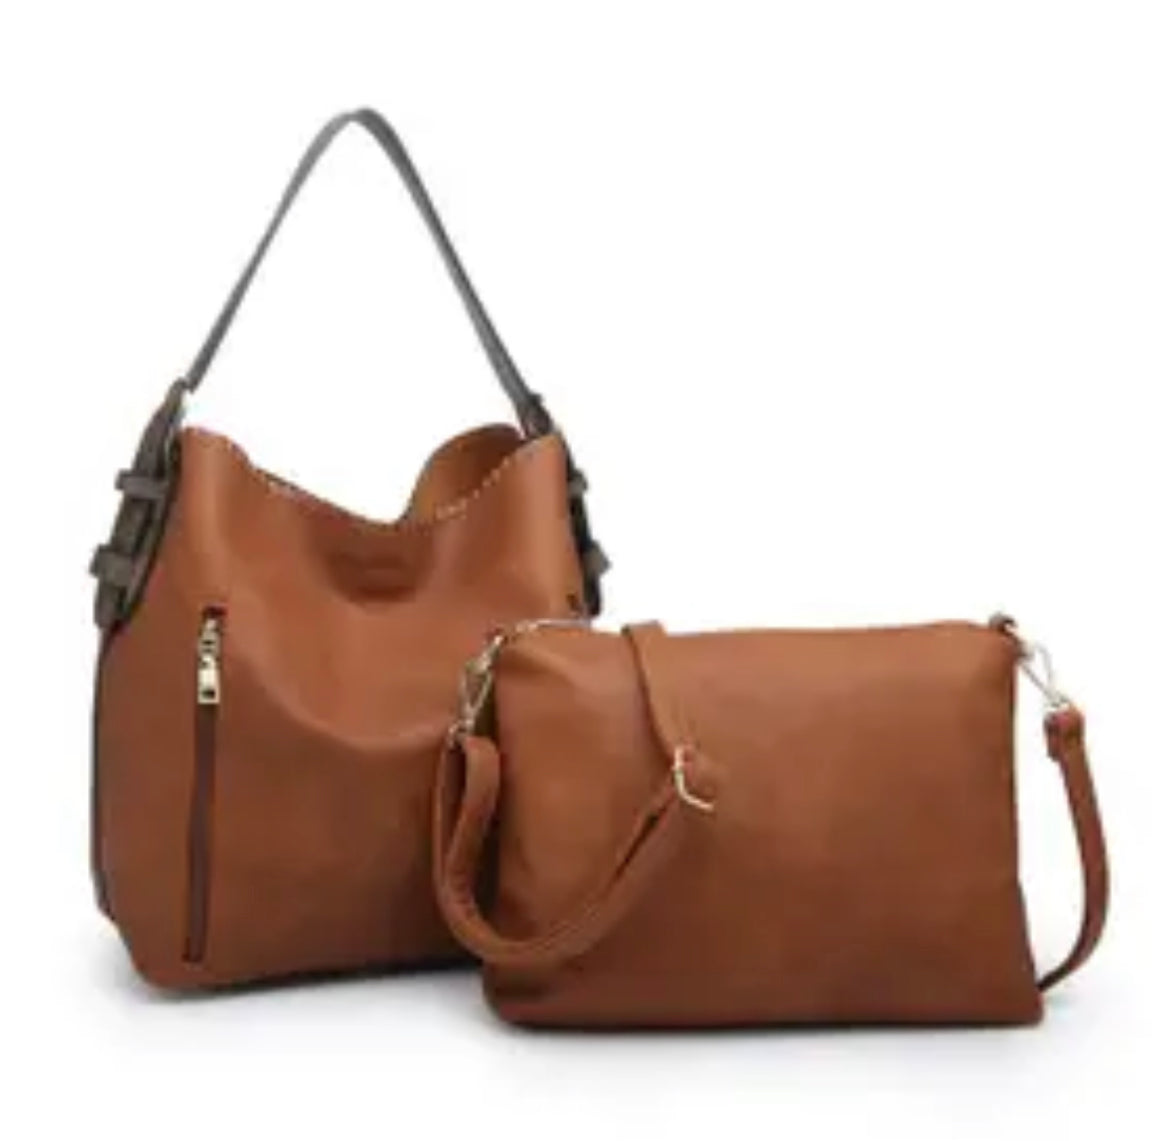 Alexa 2-in-1 Hobo bag Conceal Carry